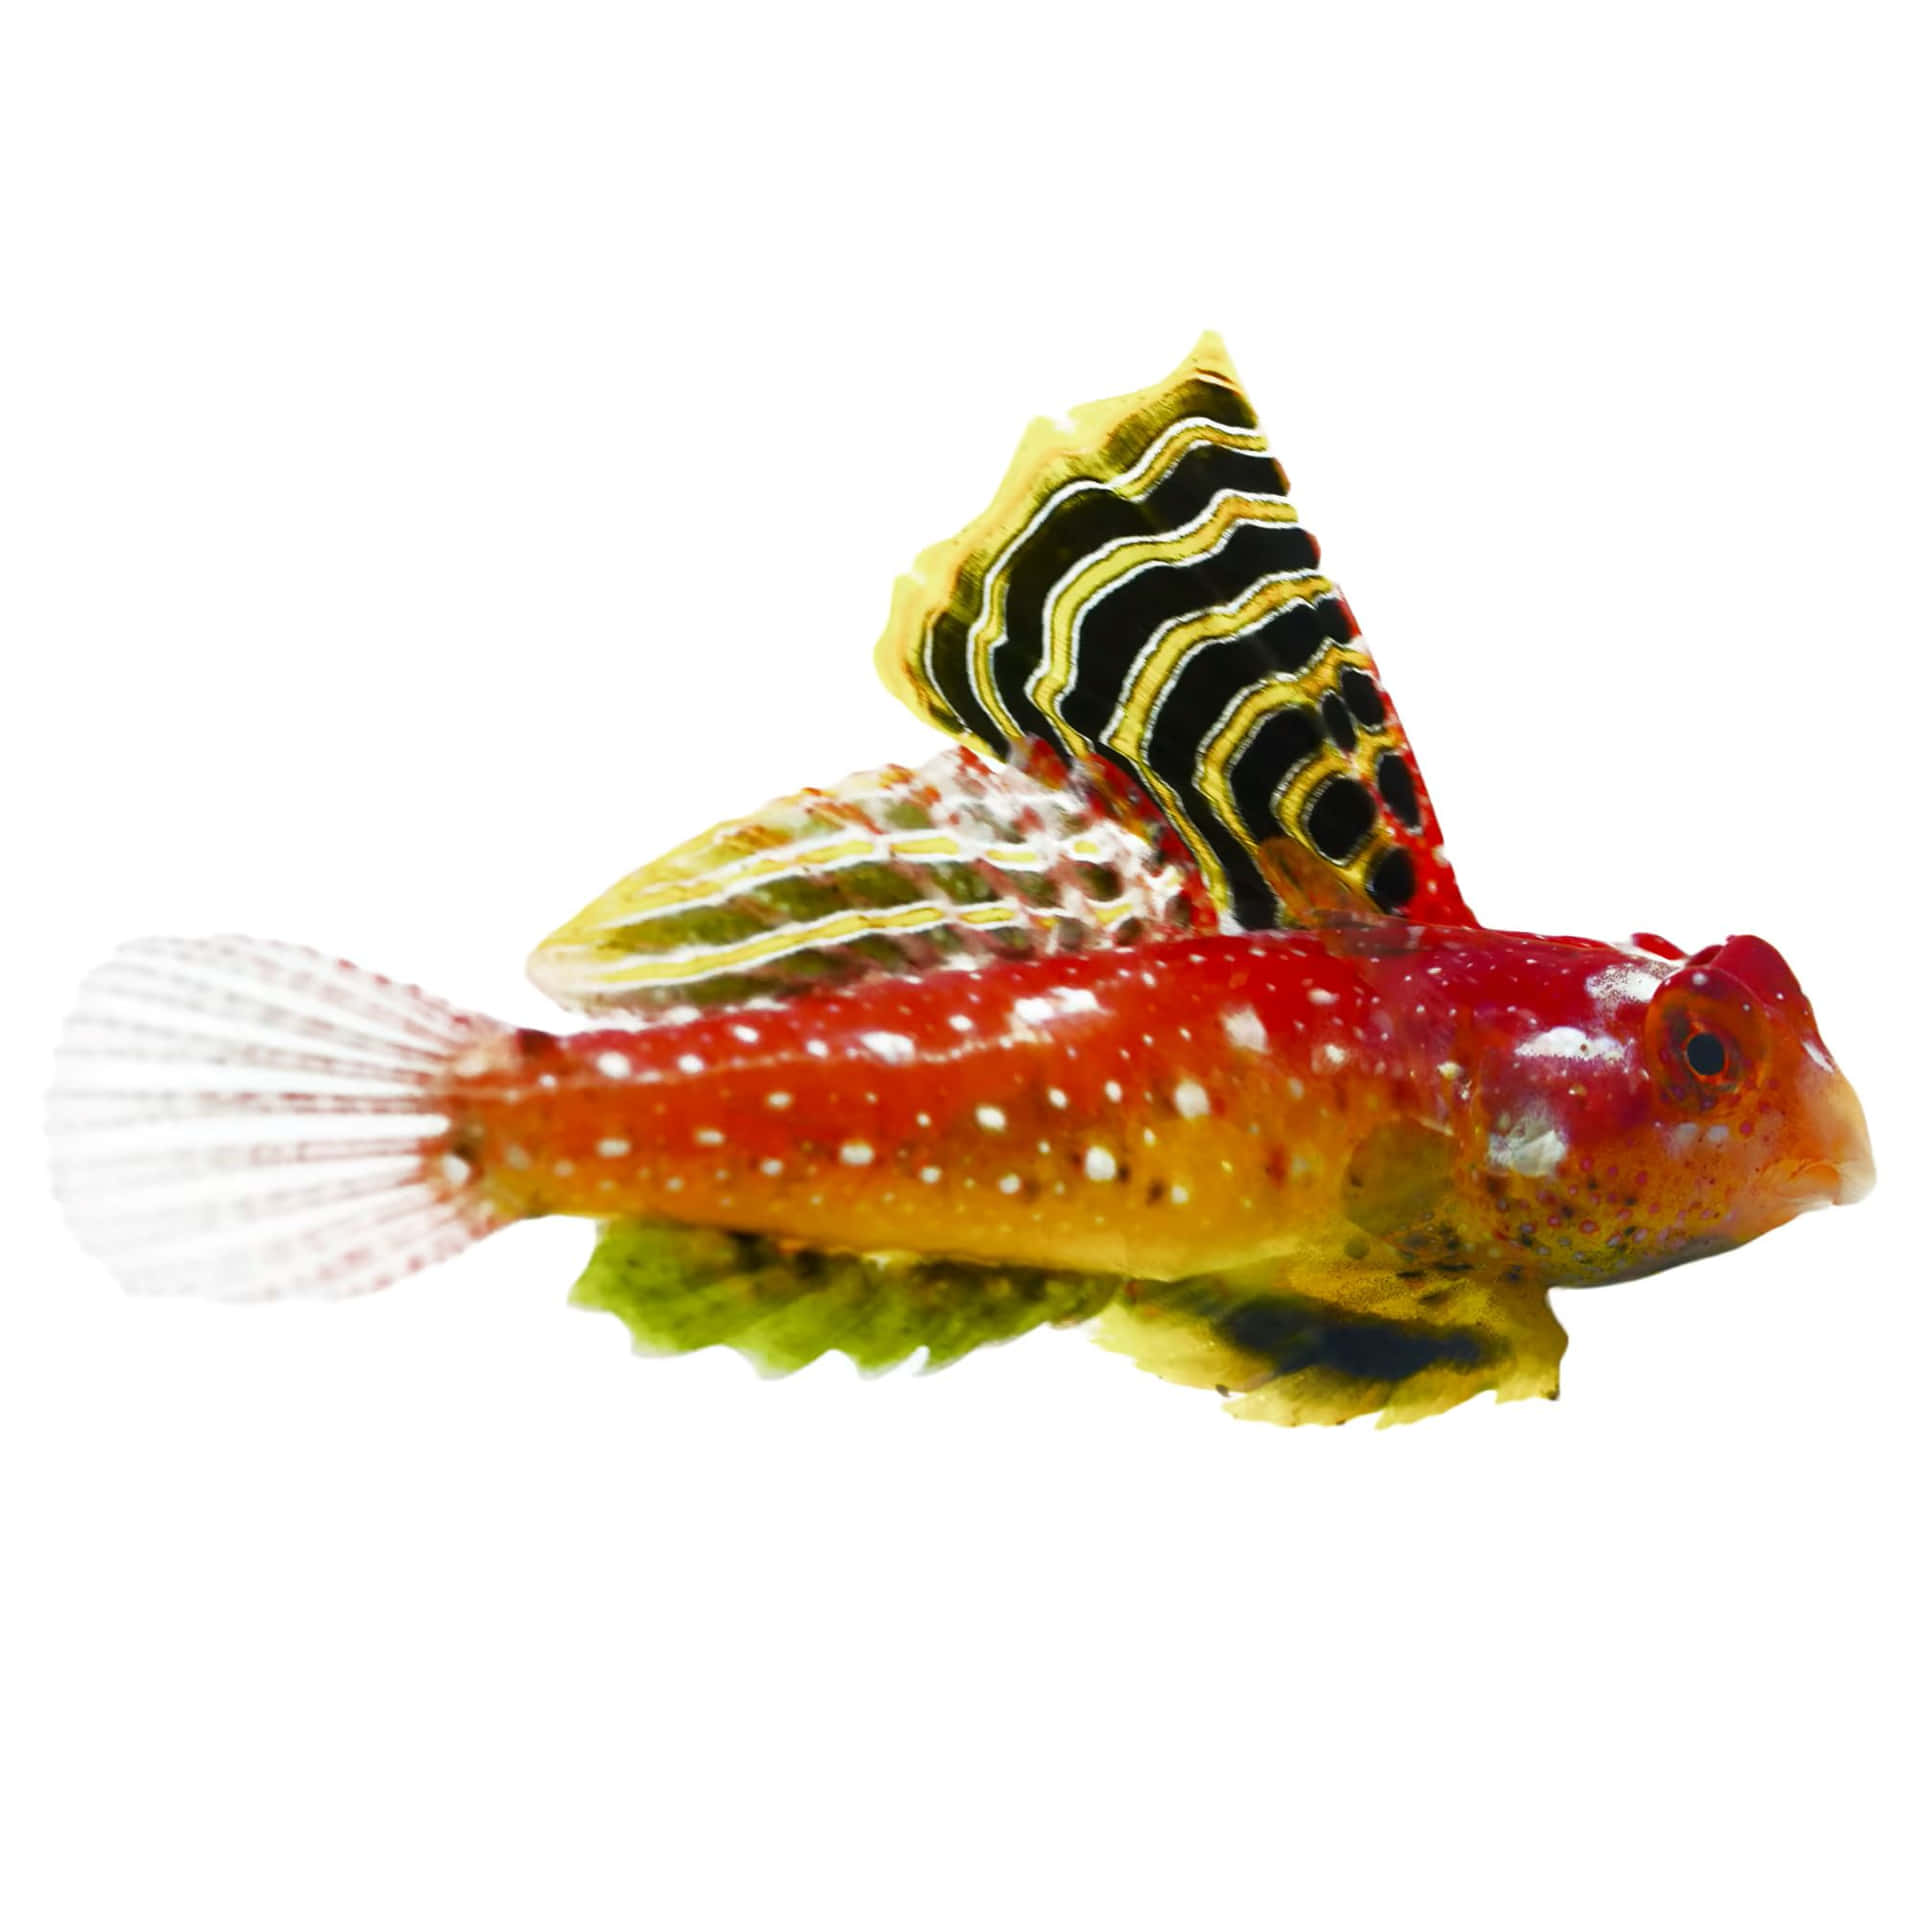 Colorful Dragonet Fish Wallpaper